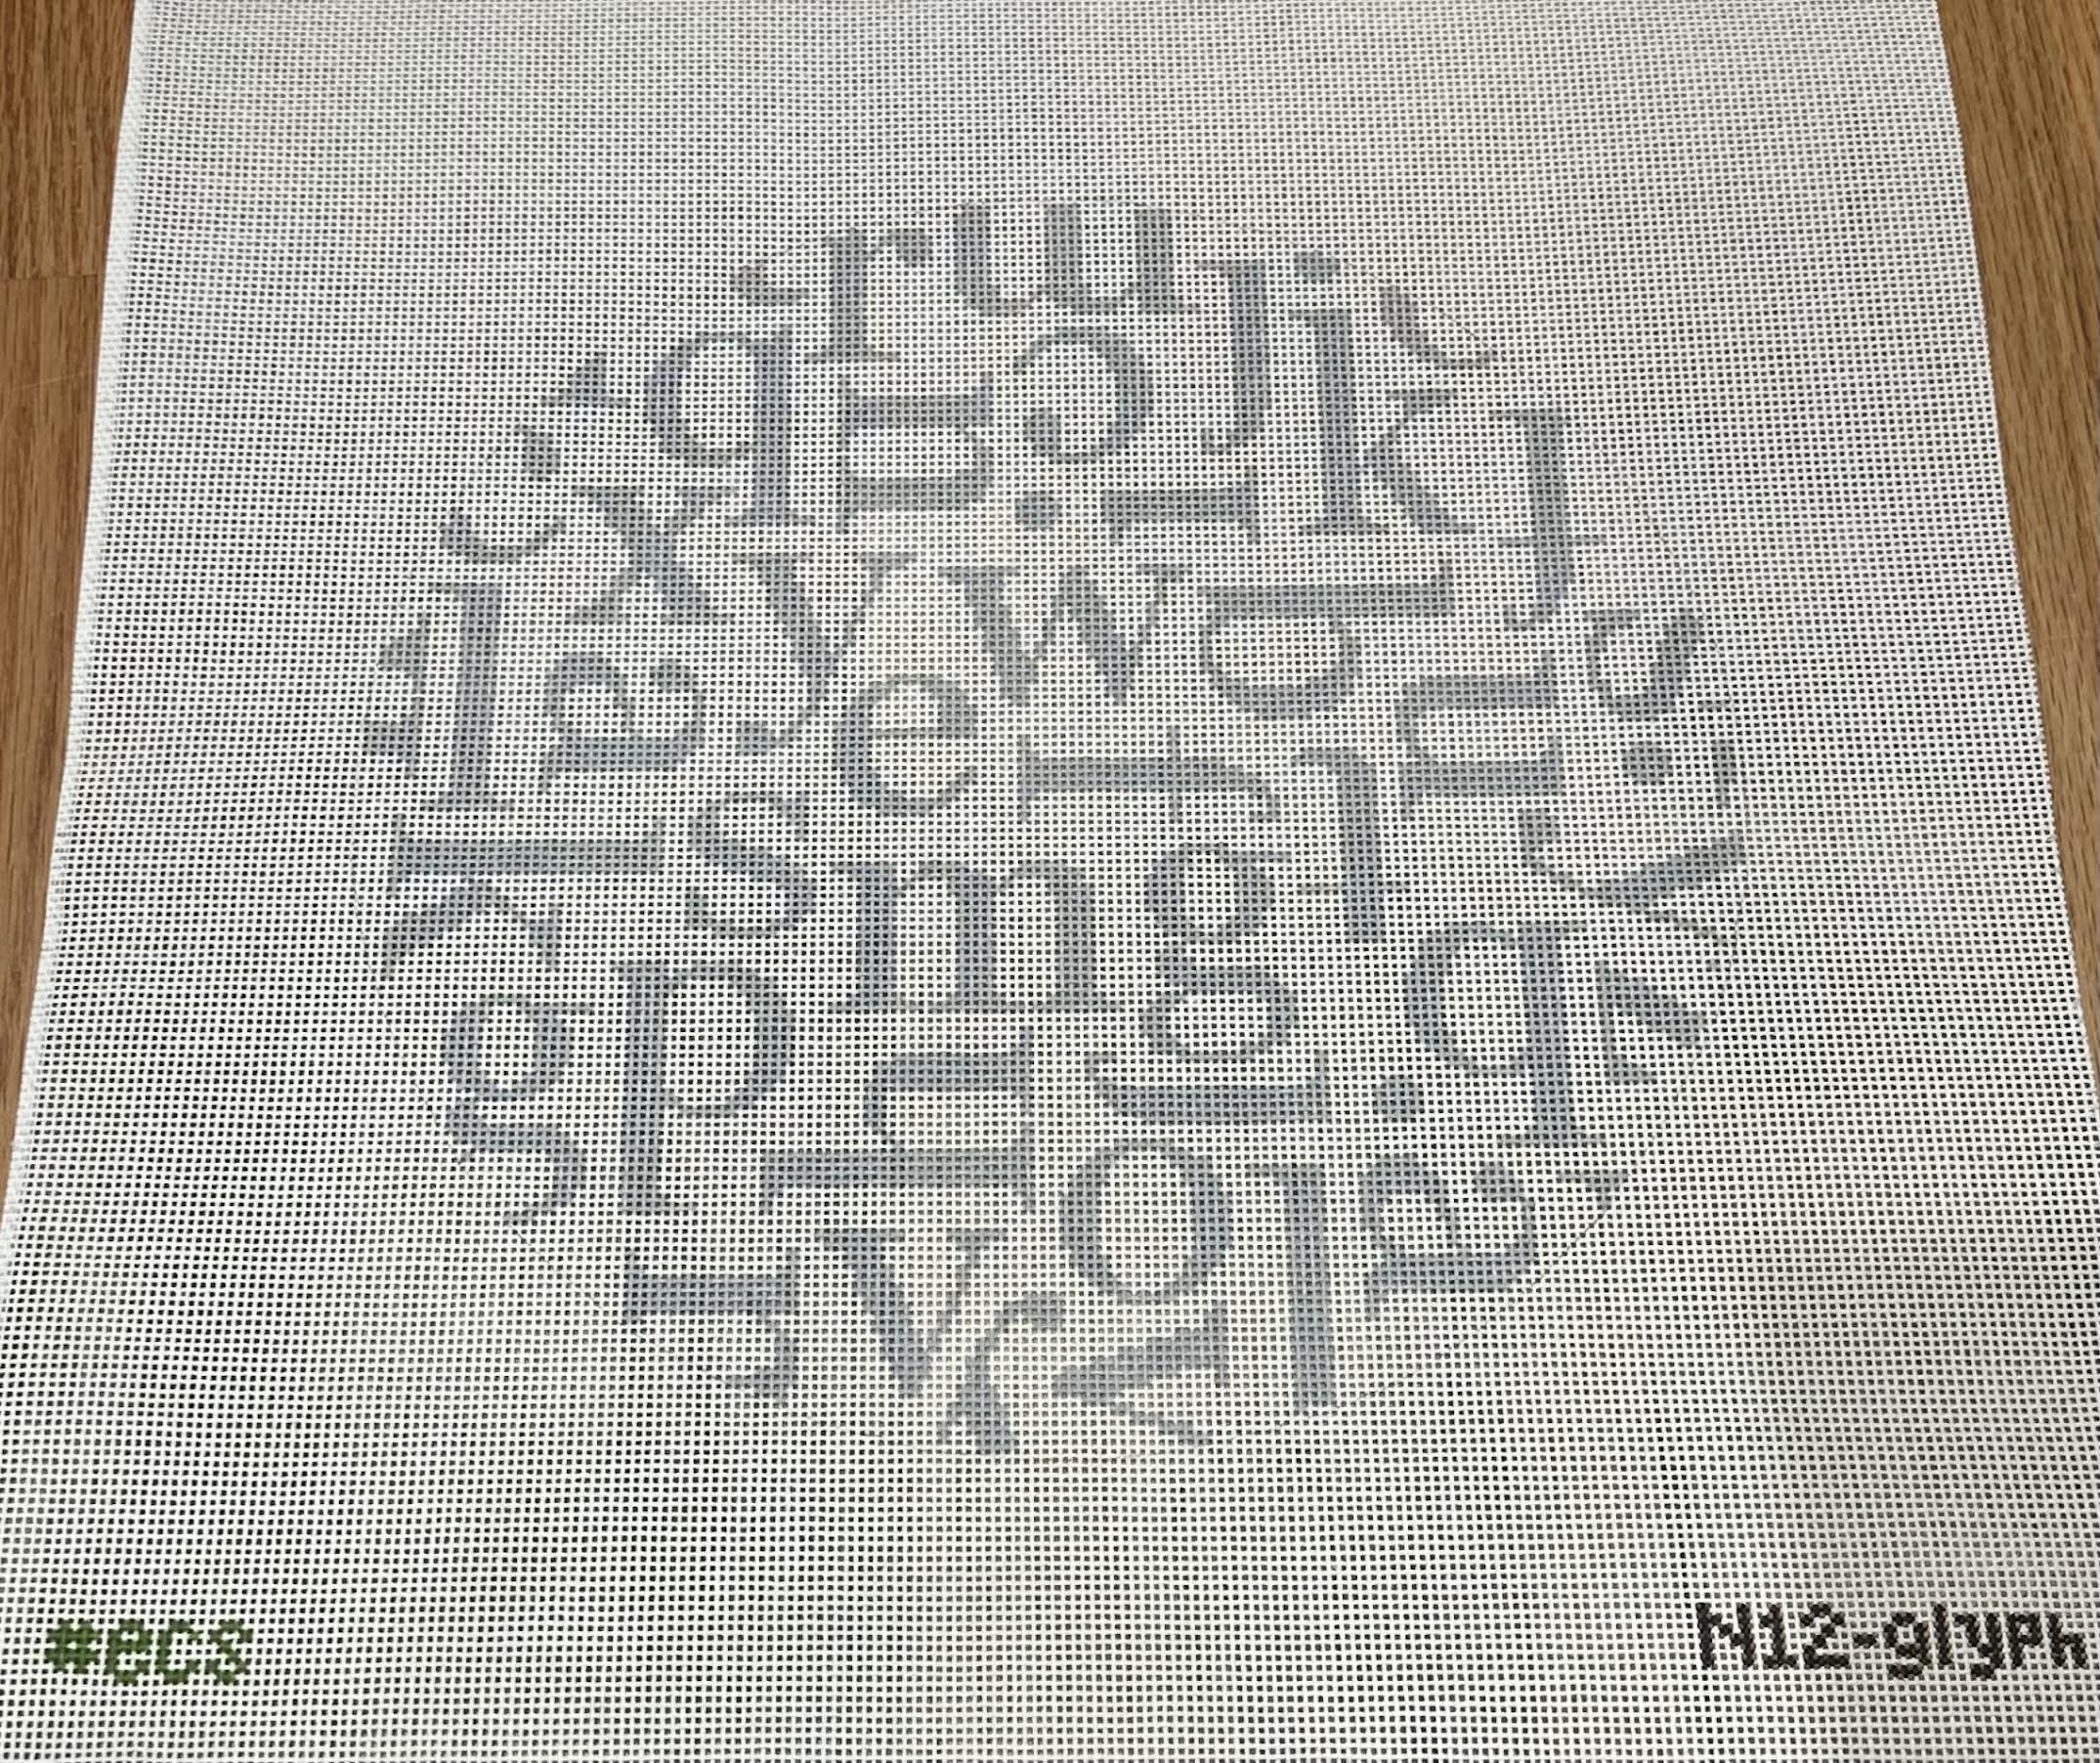 Elizabeth Crane Swartz Designs N12-glyph Comes with a Color Chart to Follow